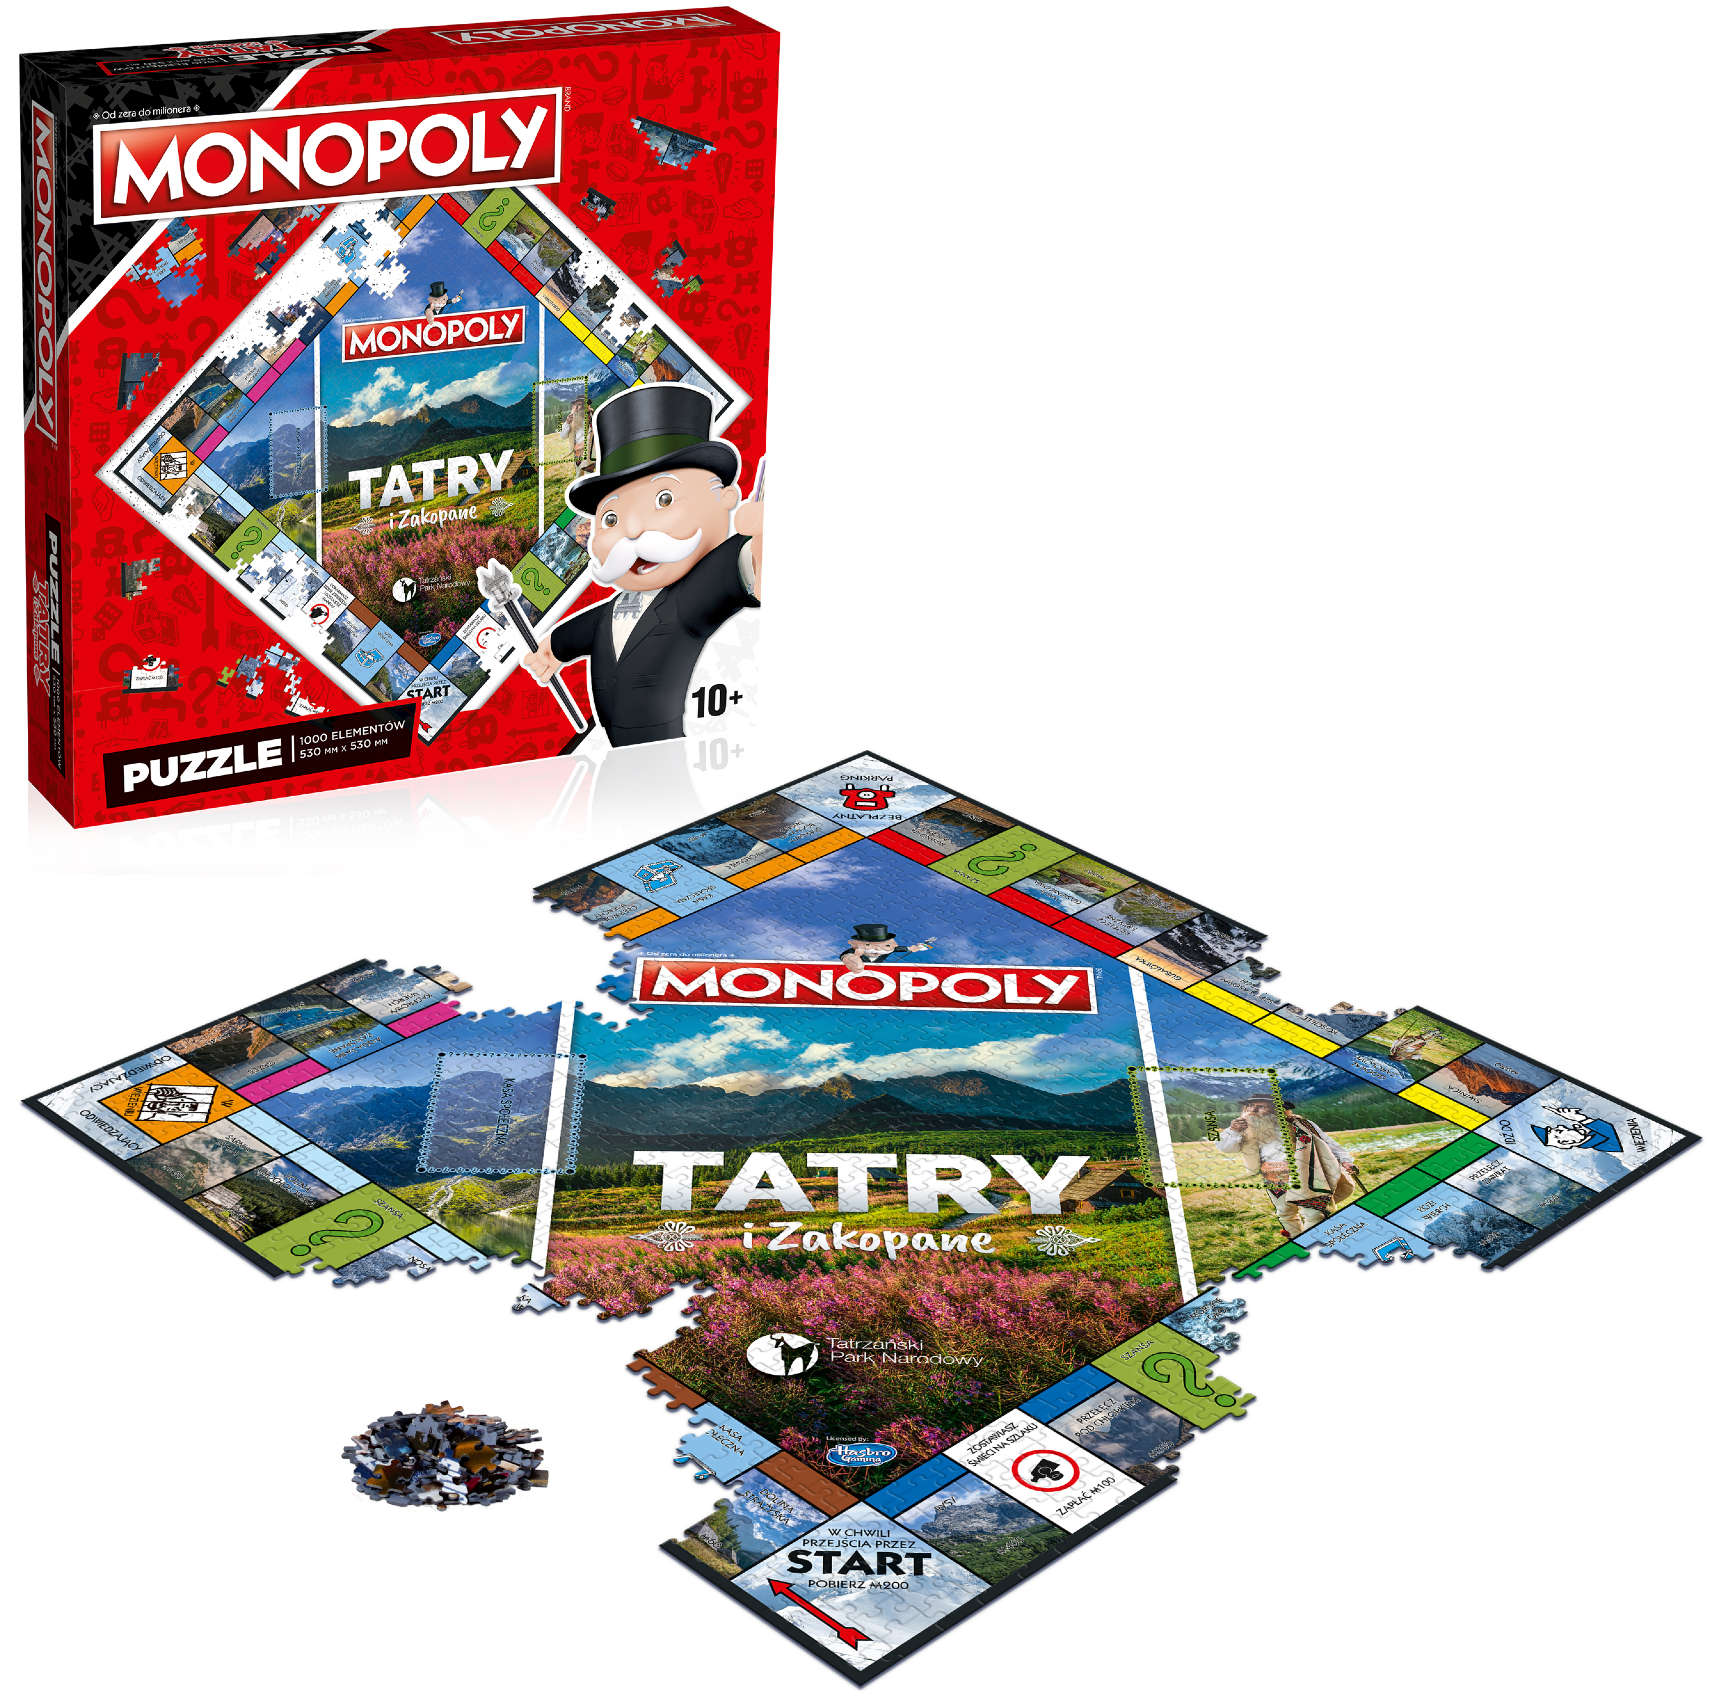 Puzzle Monopoly Tatry i Zakopane plansza 1000 elementw Winning Moves